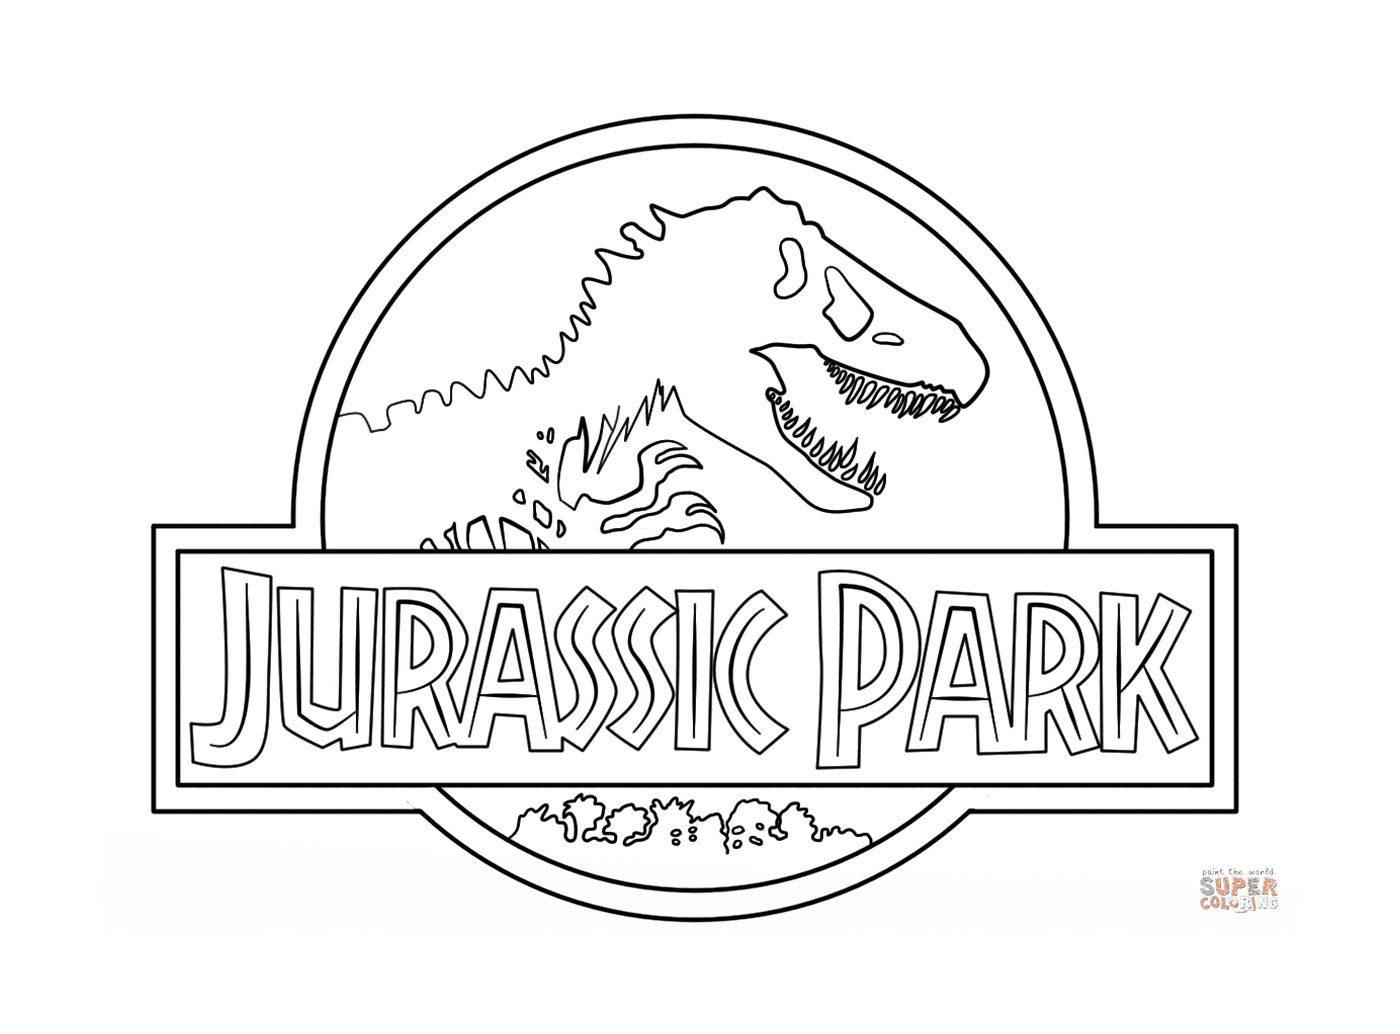  Logo Jurassic Park, the environment above all 